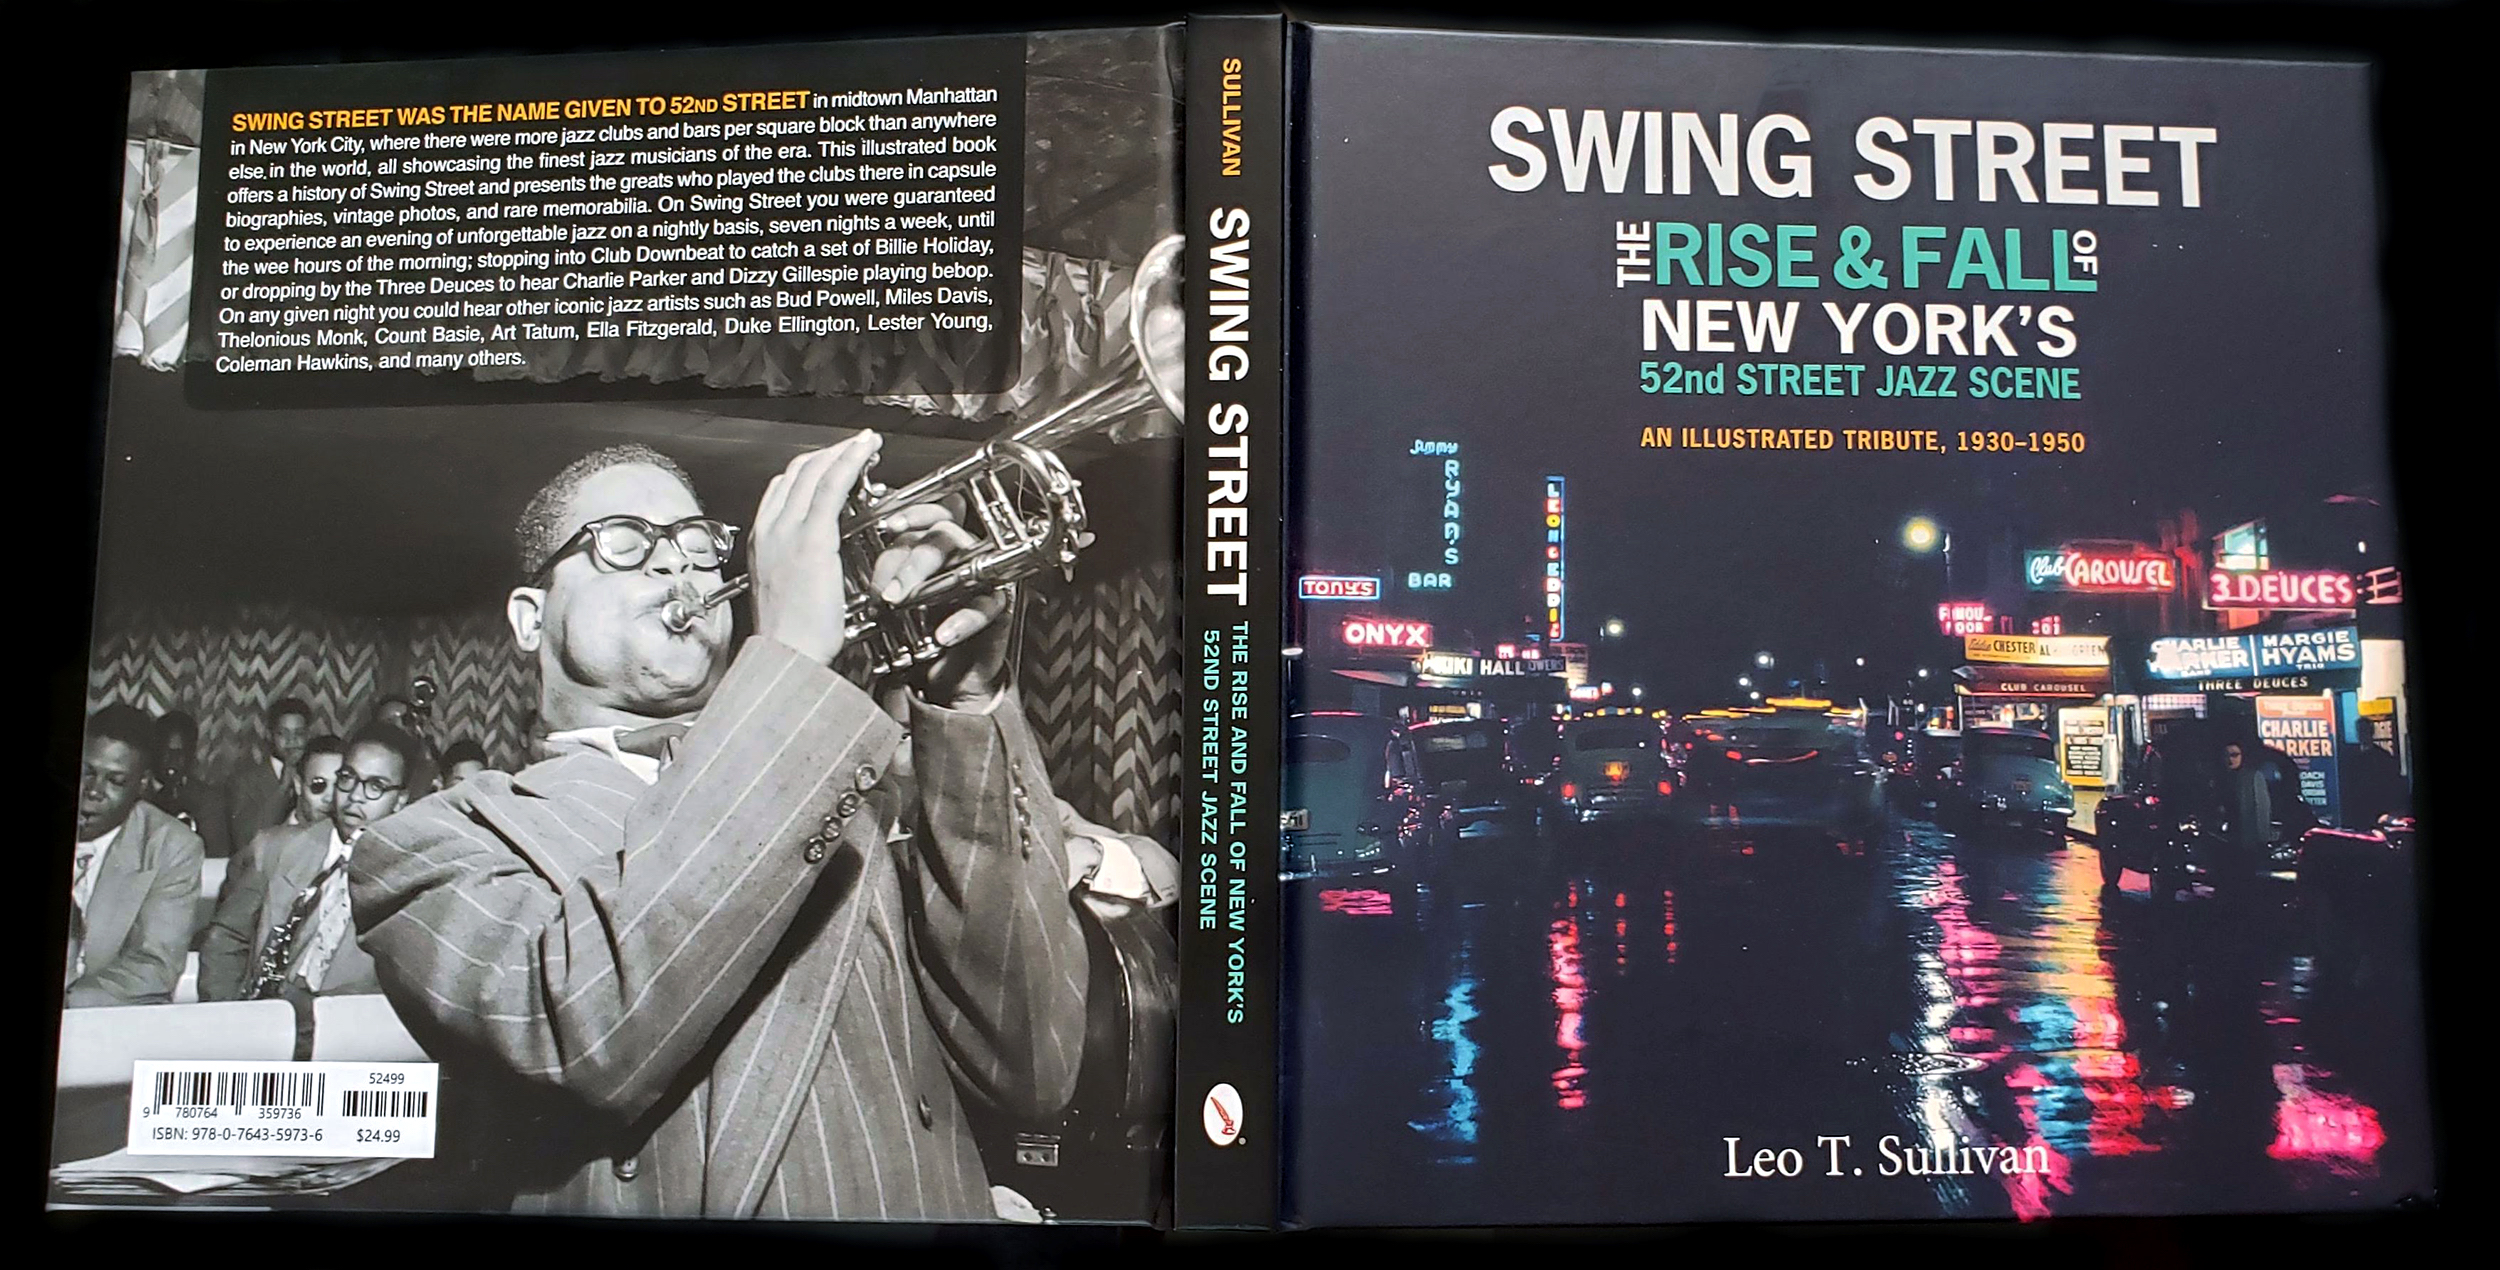 Swing Street book covers